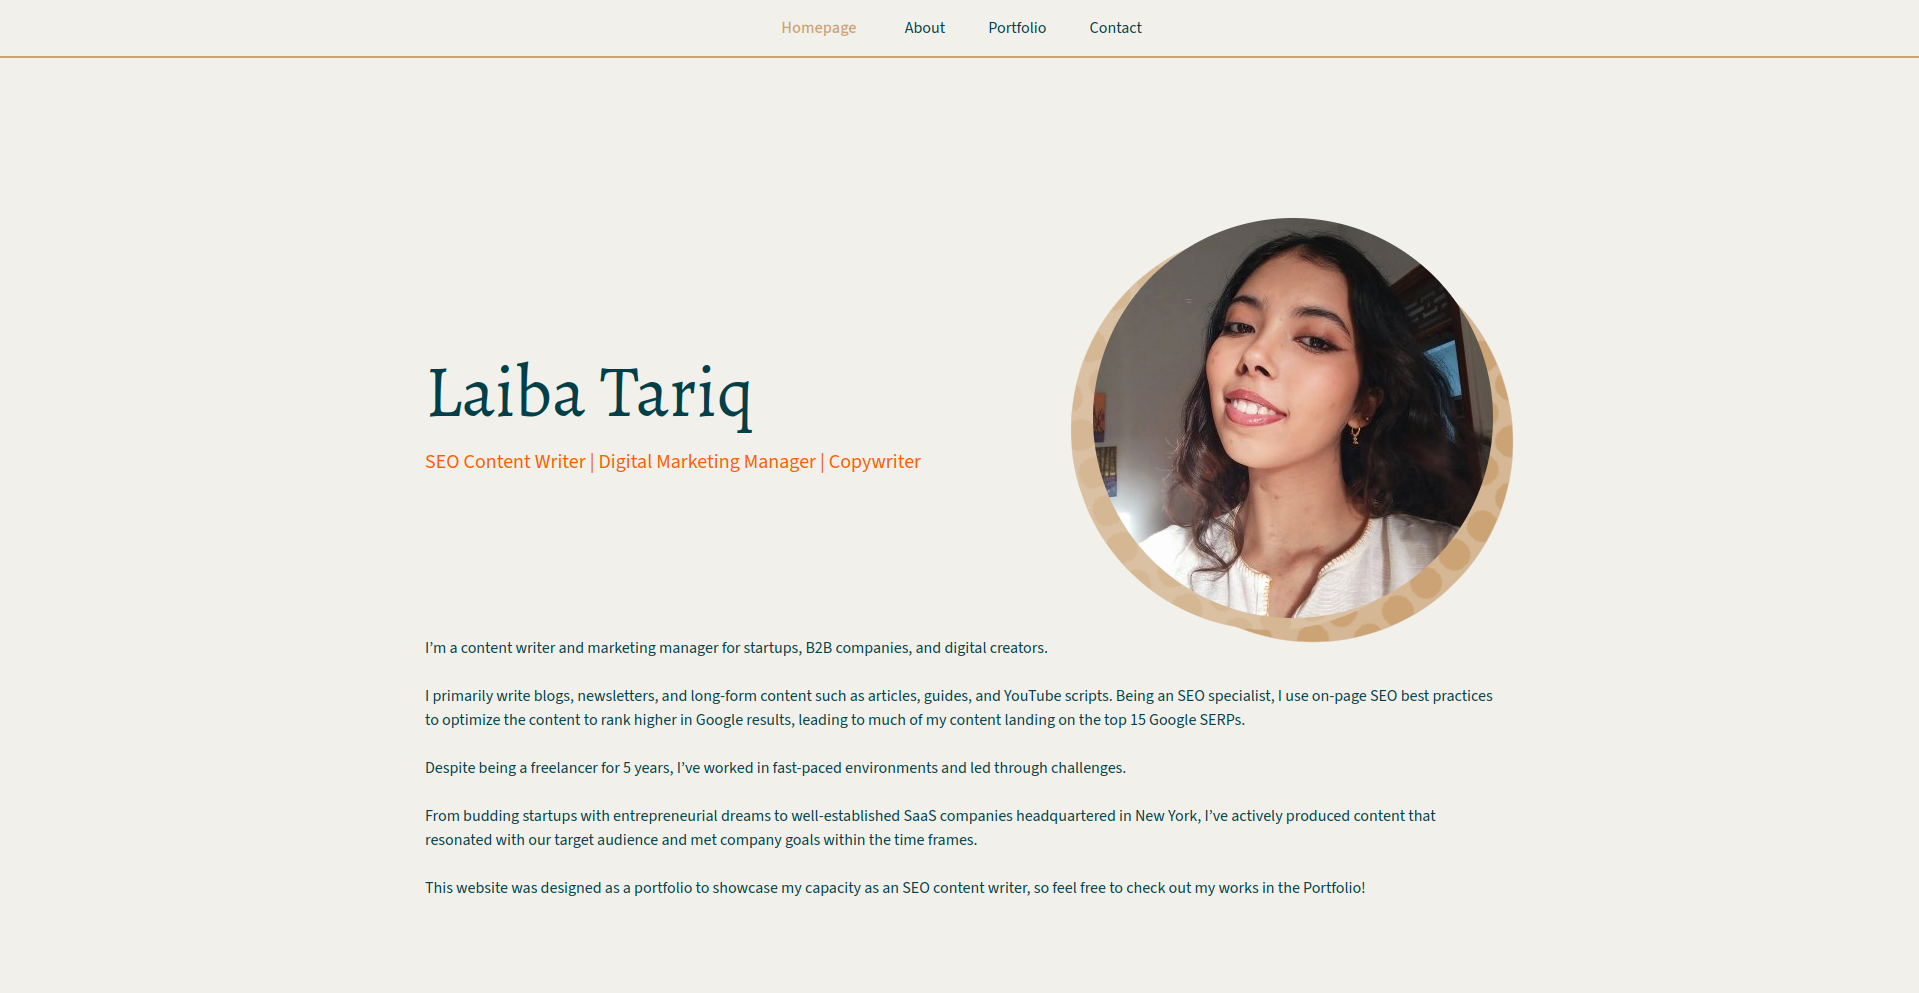 Laiba's Website